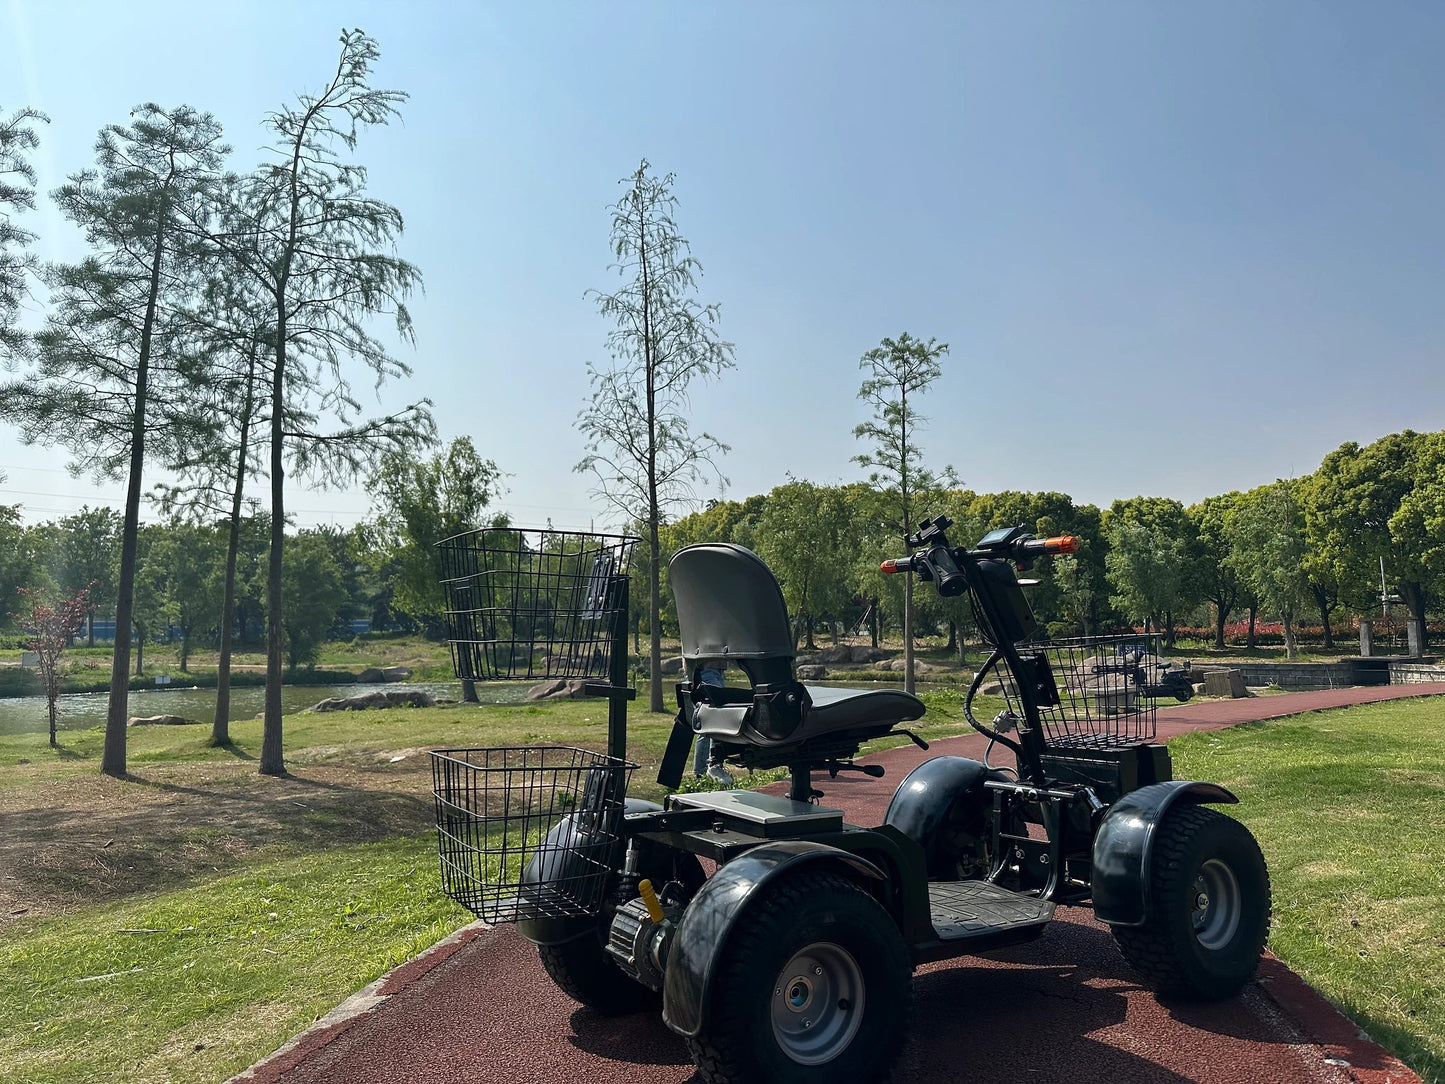 Green Transporter Cheeta Ninja Mobility Golf Cart-My Perfect Scooter